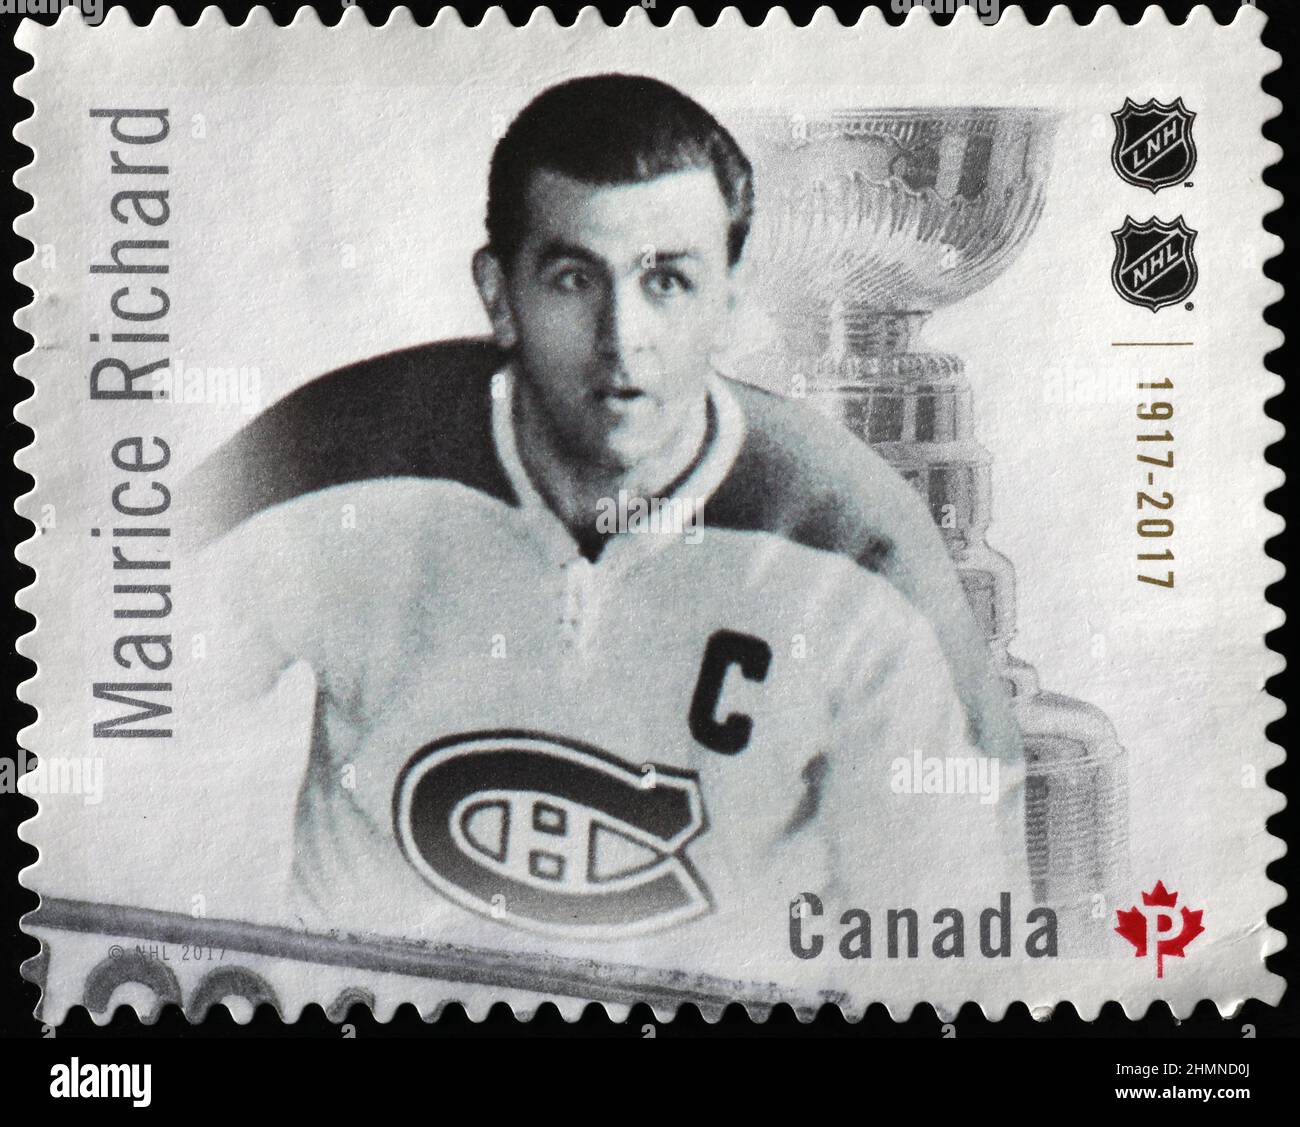 Canadian hockey player Maurice Richard on postage stamp Stock Photo